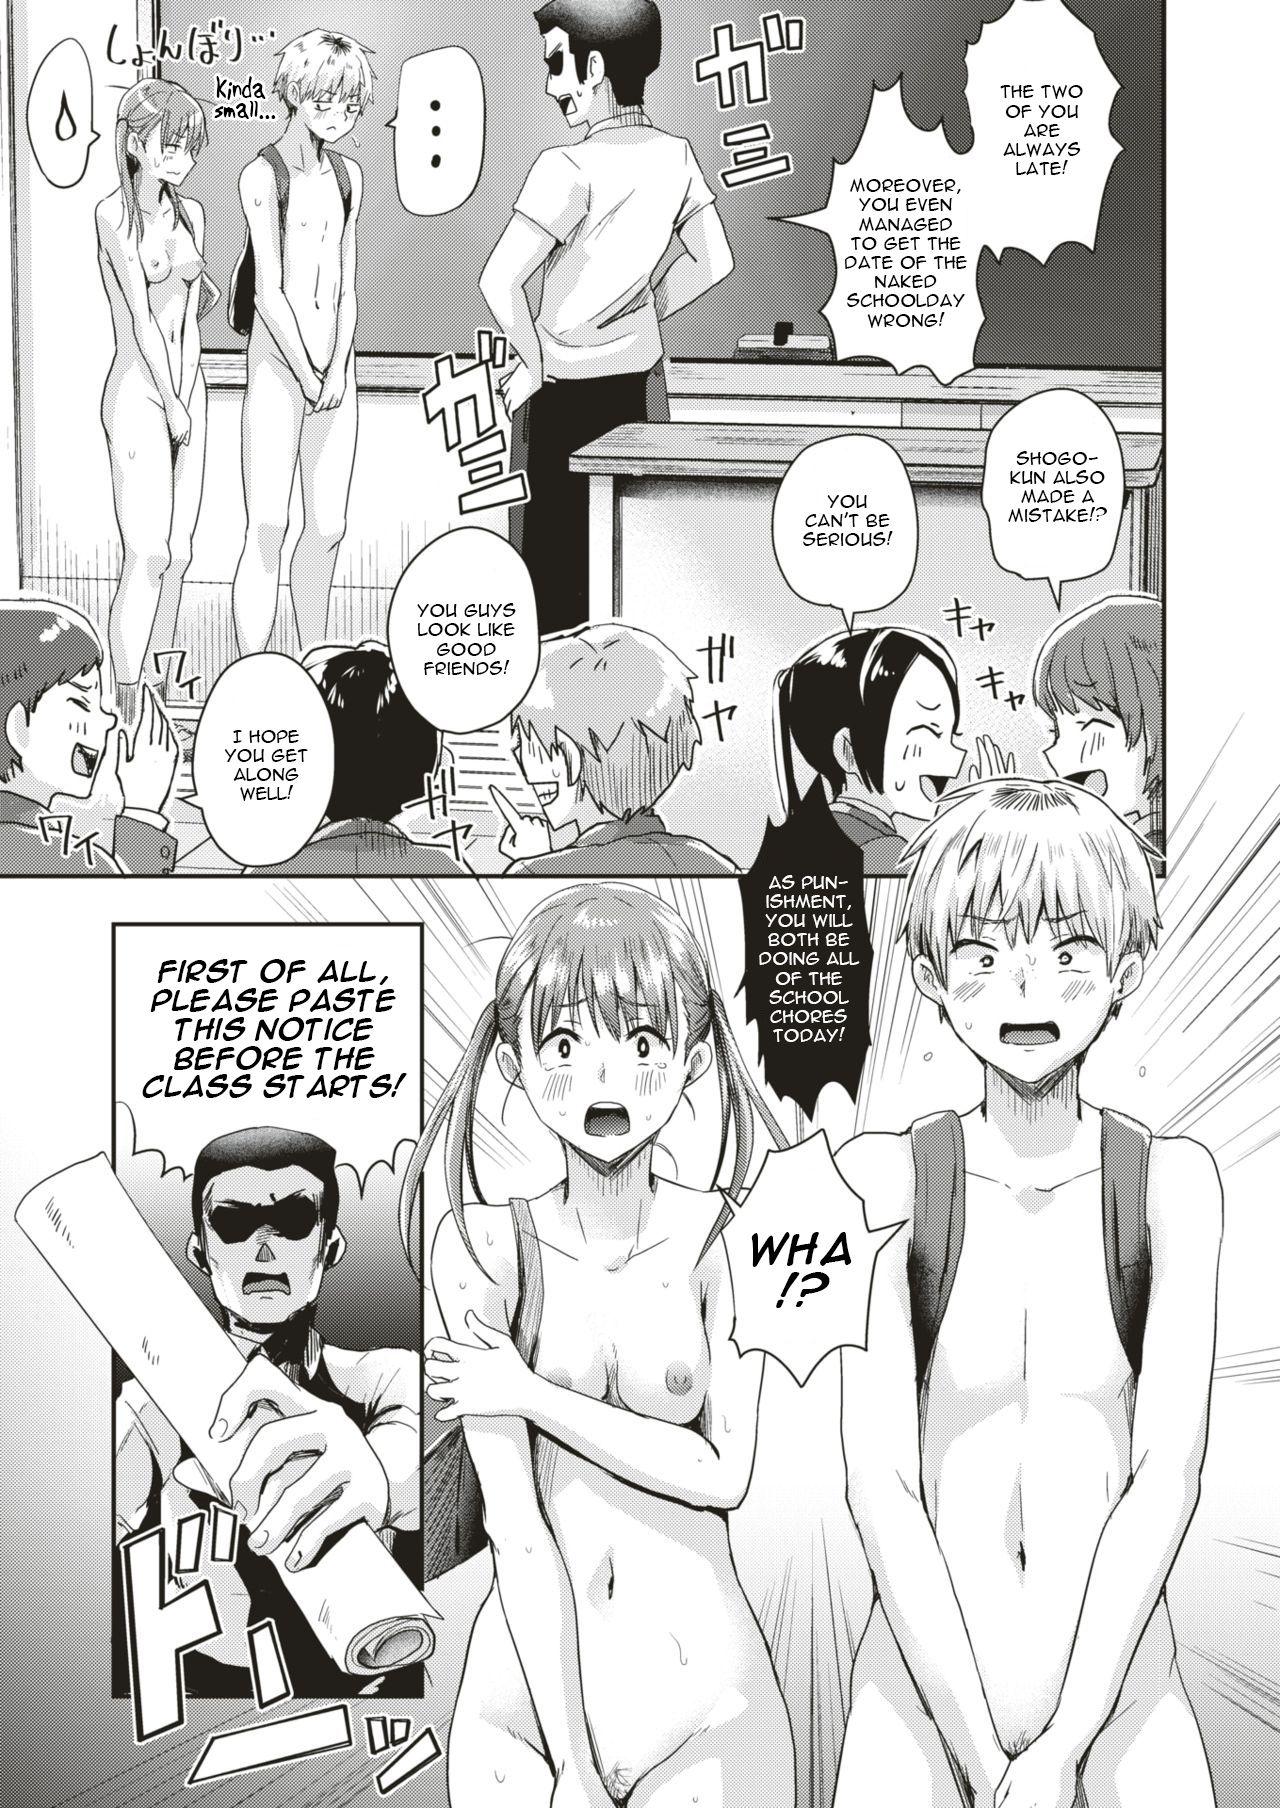 Petite Teenager Honjitsu wa Zenra Toukoubi!? | Today is a Naked Schoolday!? Rola - Page 8